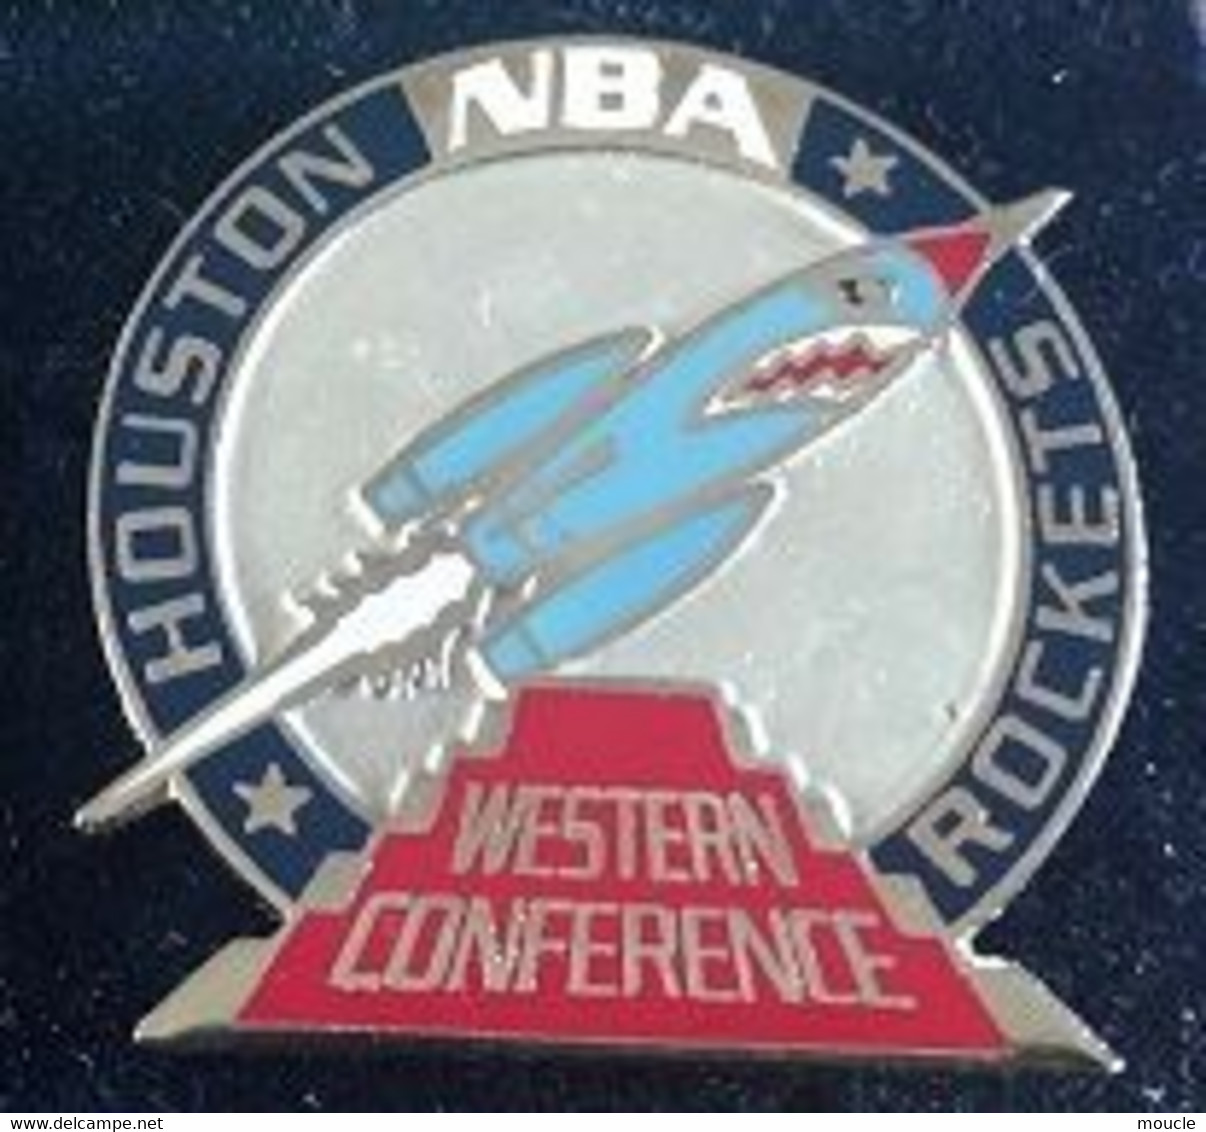 NBA - BASKETBALL - HOUSTON ROCKETS - WESTERN CONFERENCE - USA - ETATS UNIS AMERIQUE - LIMITED EDITION 10'000 - (30) - Basketball